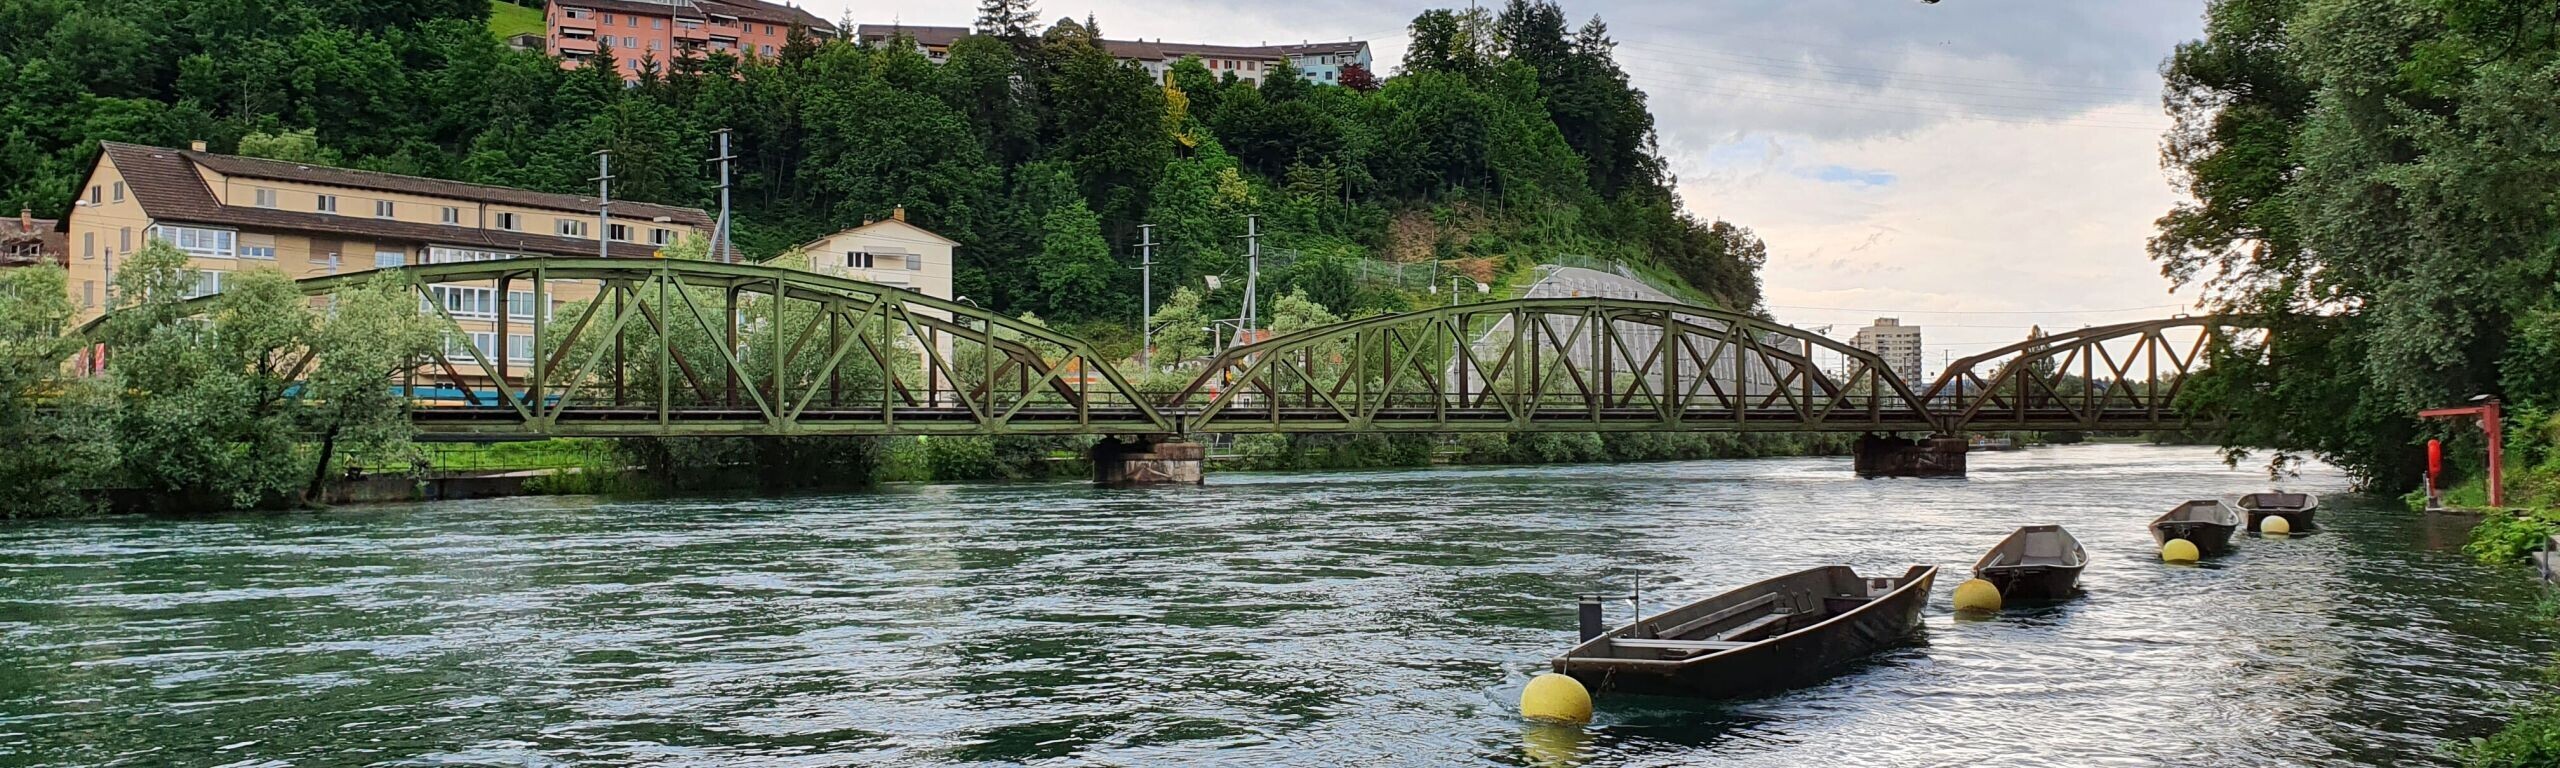 Luzern: Beginn der Instandsetzungsarbeiten an der Reussbrücke Fluhmühle